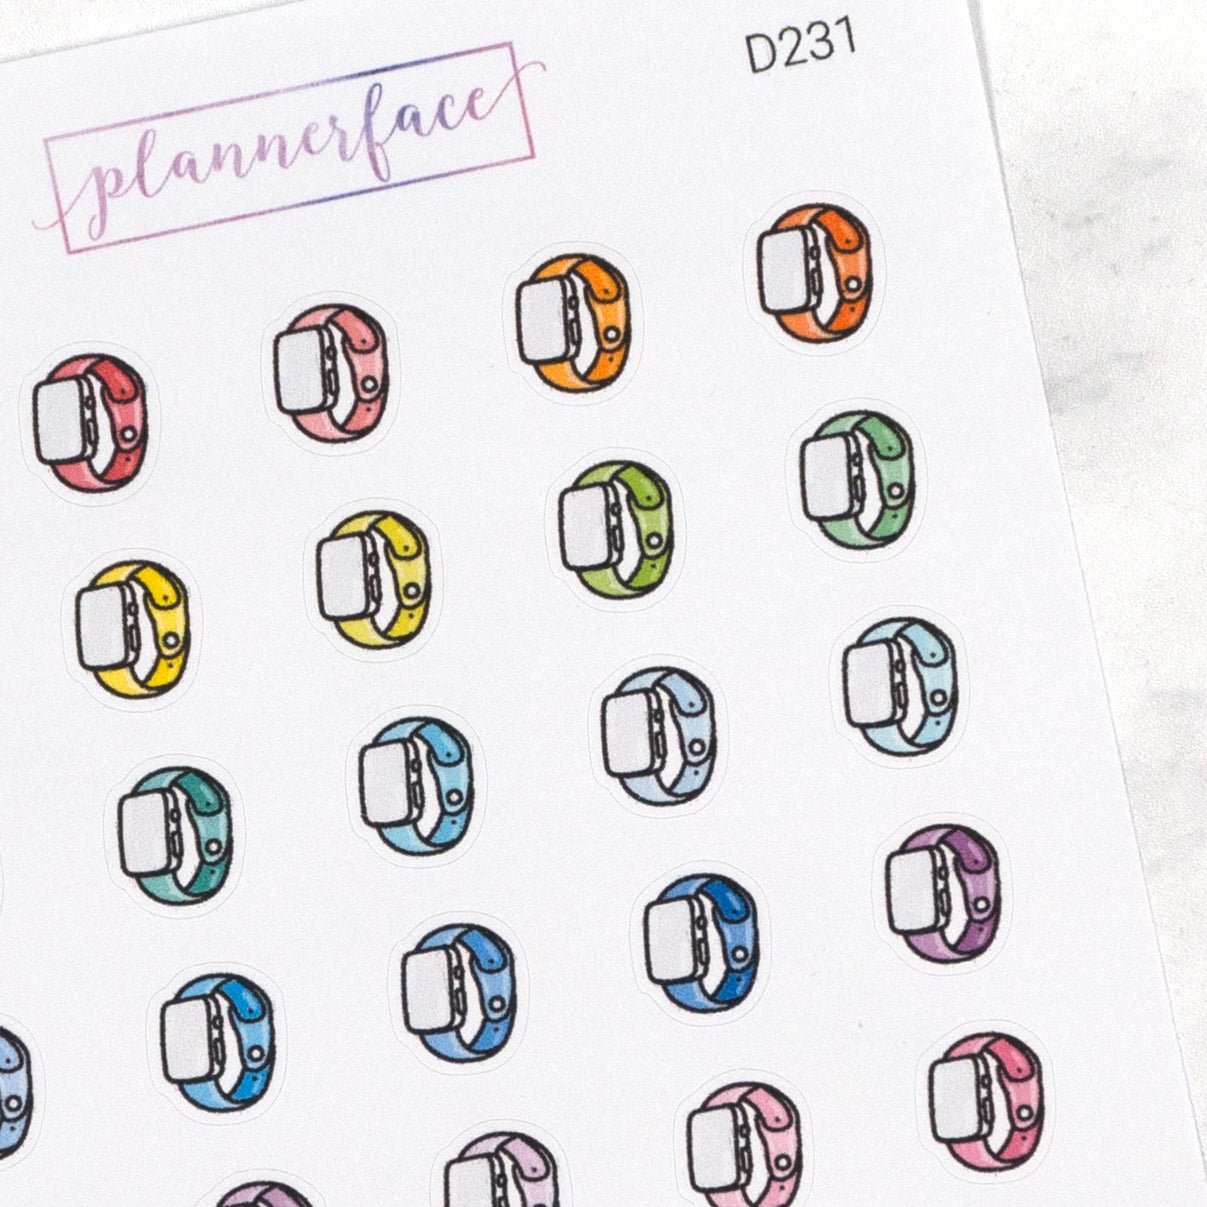 Smart Watch Multicolour Doodles by Plannerface